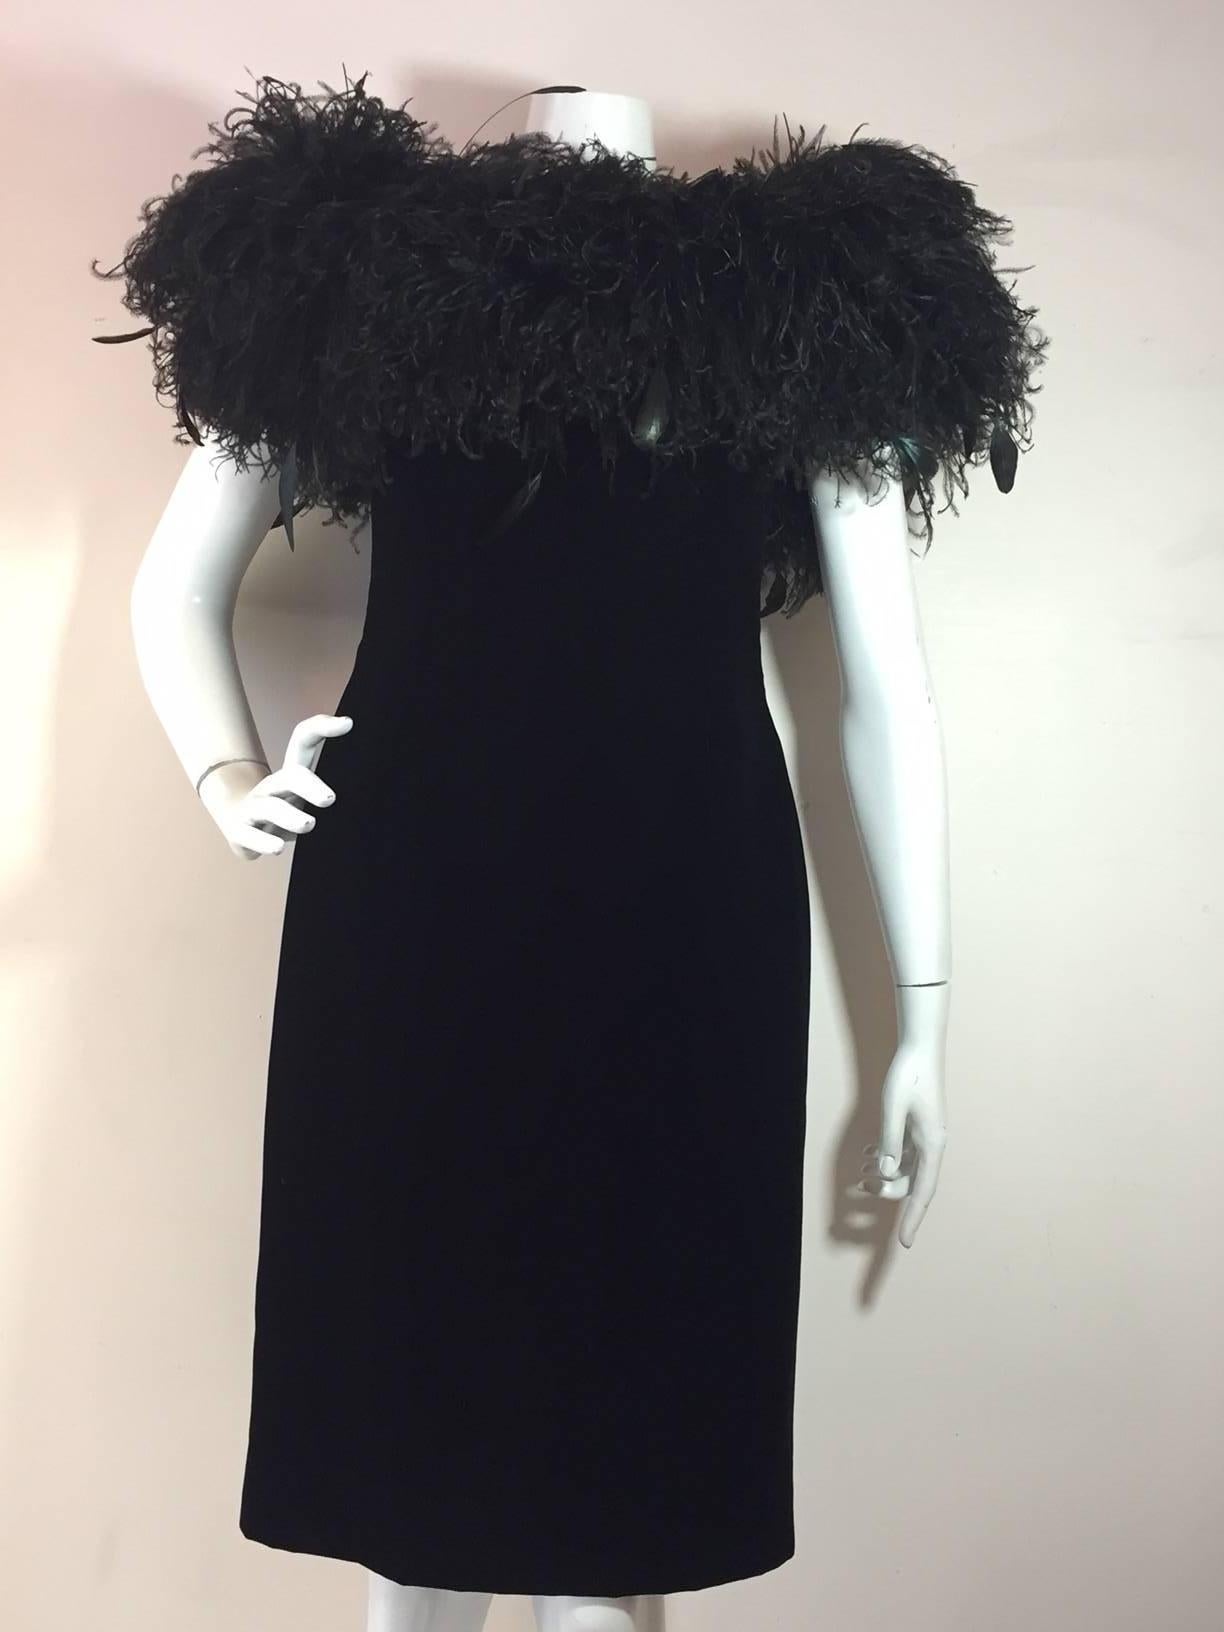 Women's 1980s Victor Costa Strapless Black Velvet Cocktail Dress w/ Extravagant Feathers